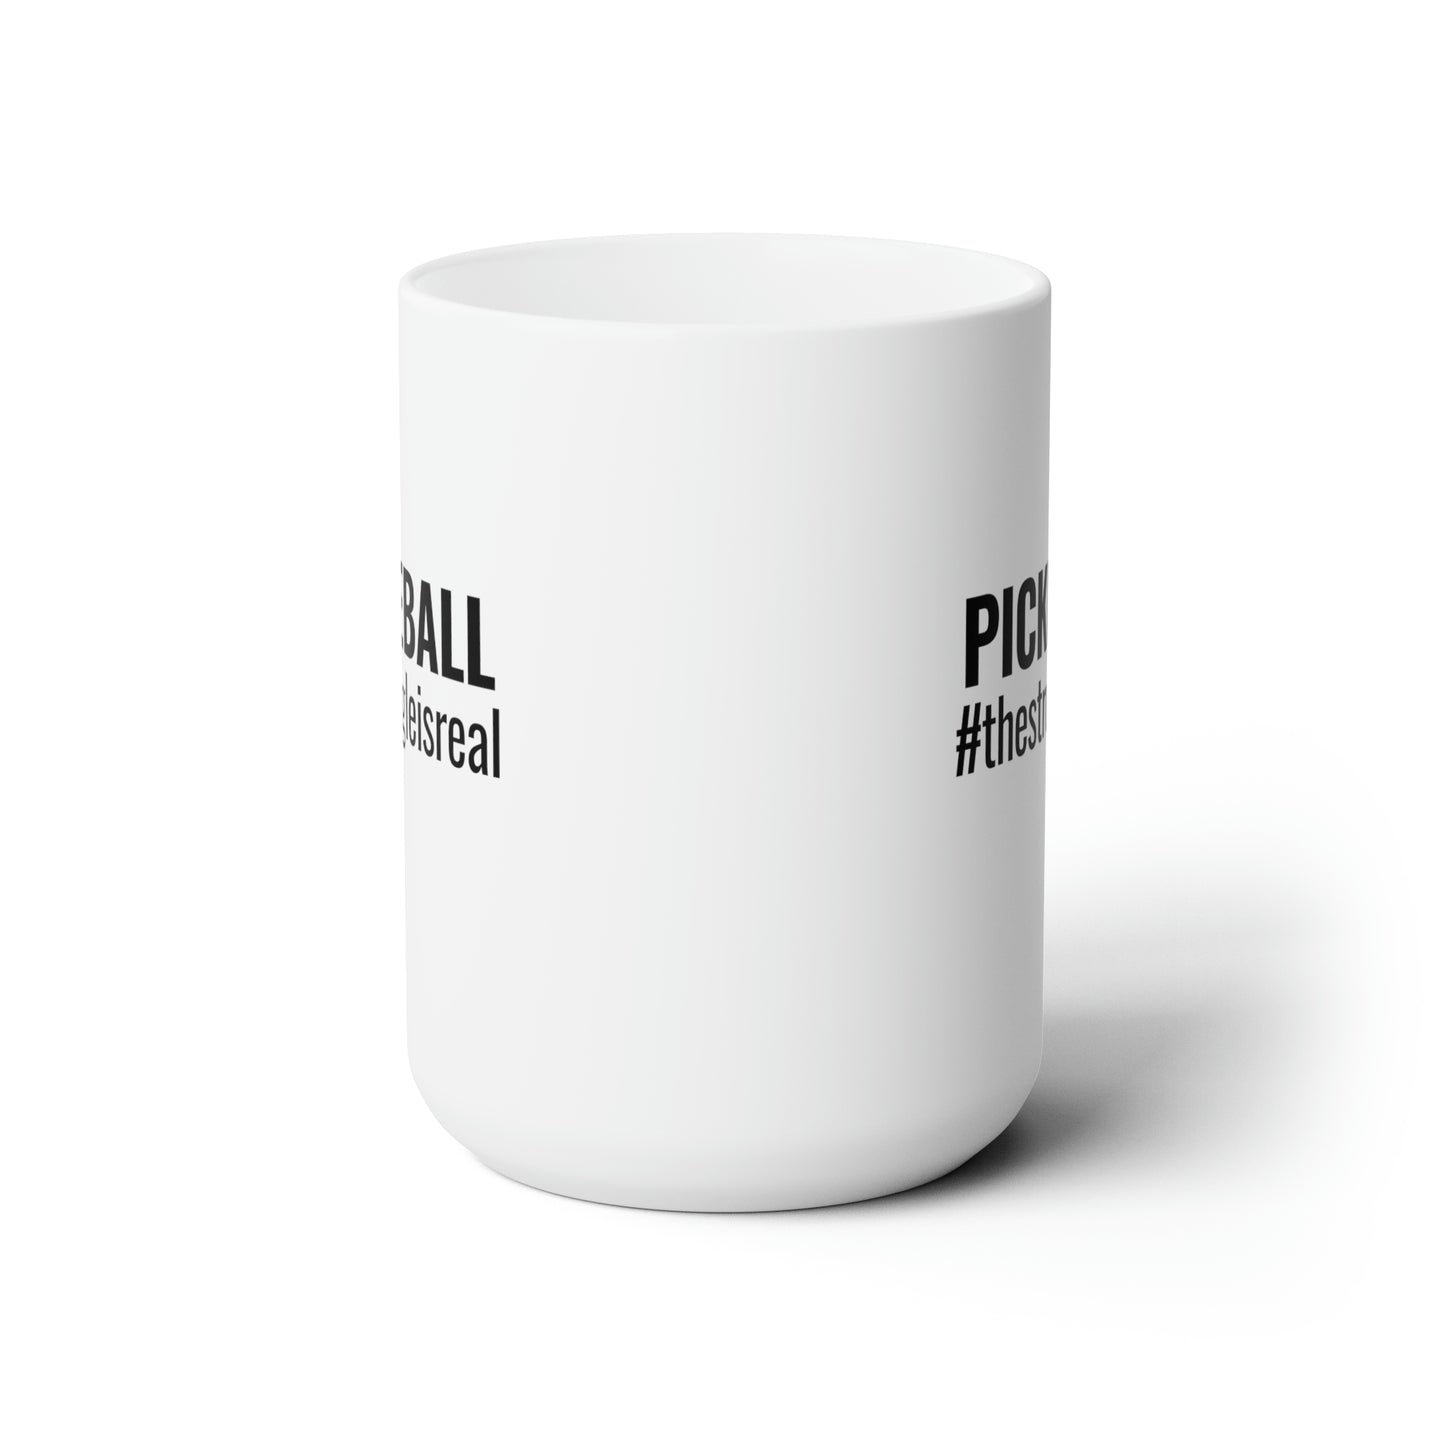 Pickleball #thestruggleisreal 15 Oz White Coffee Mug